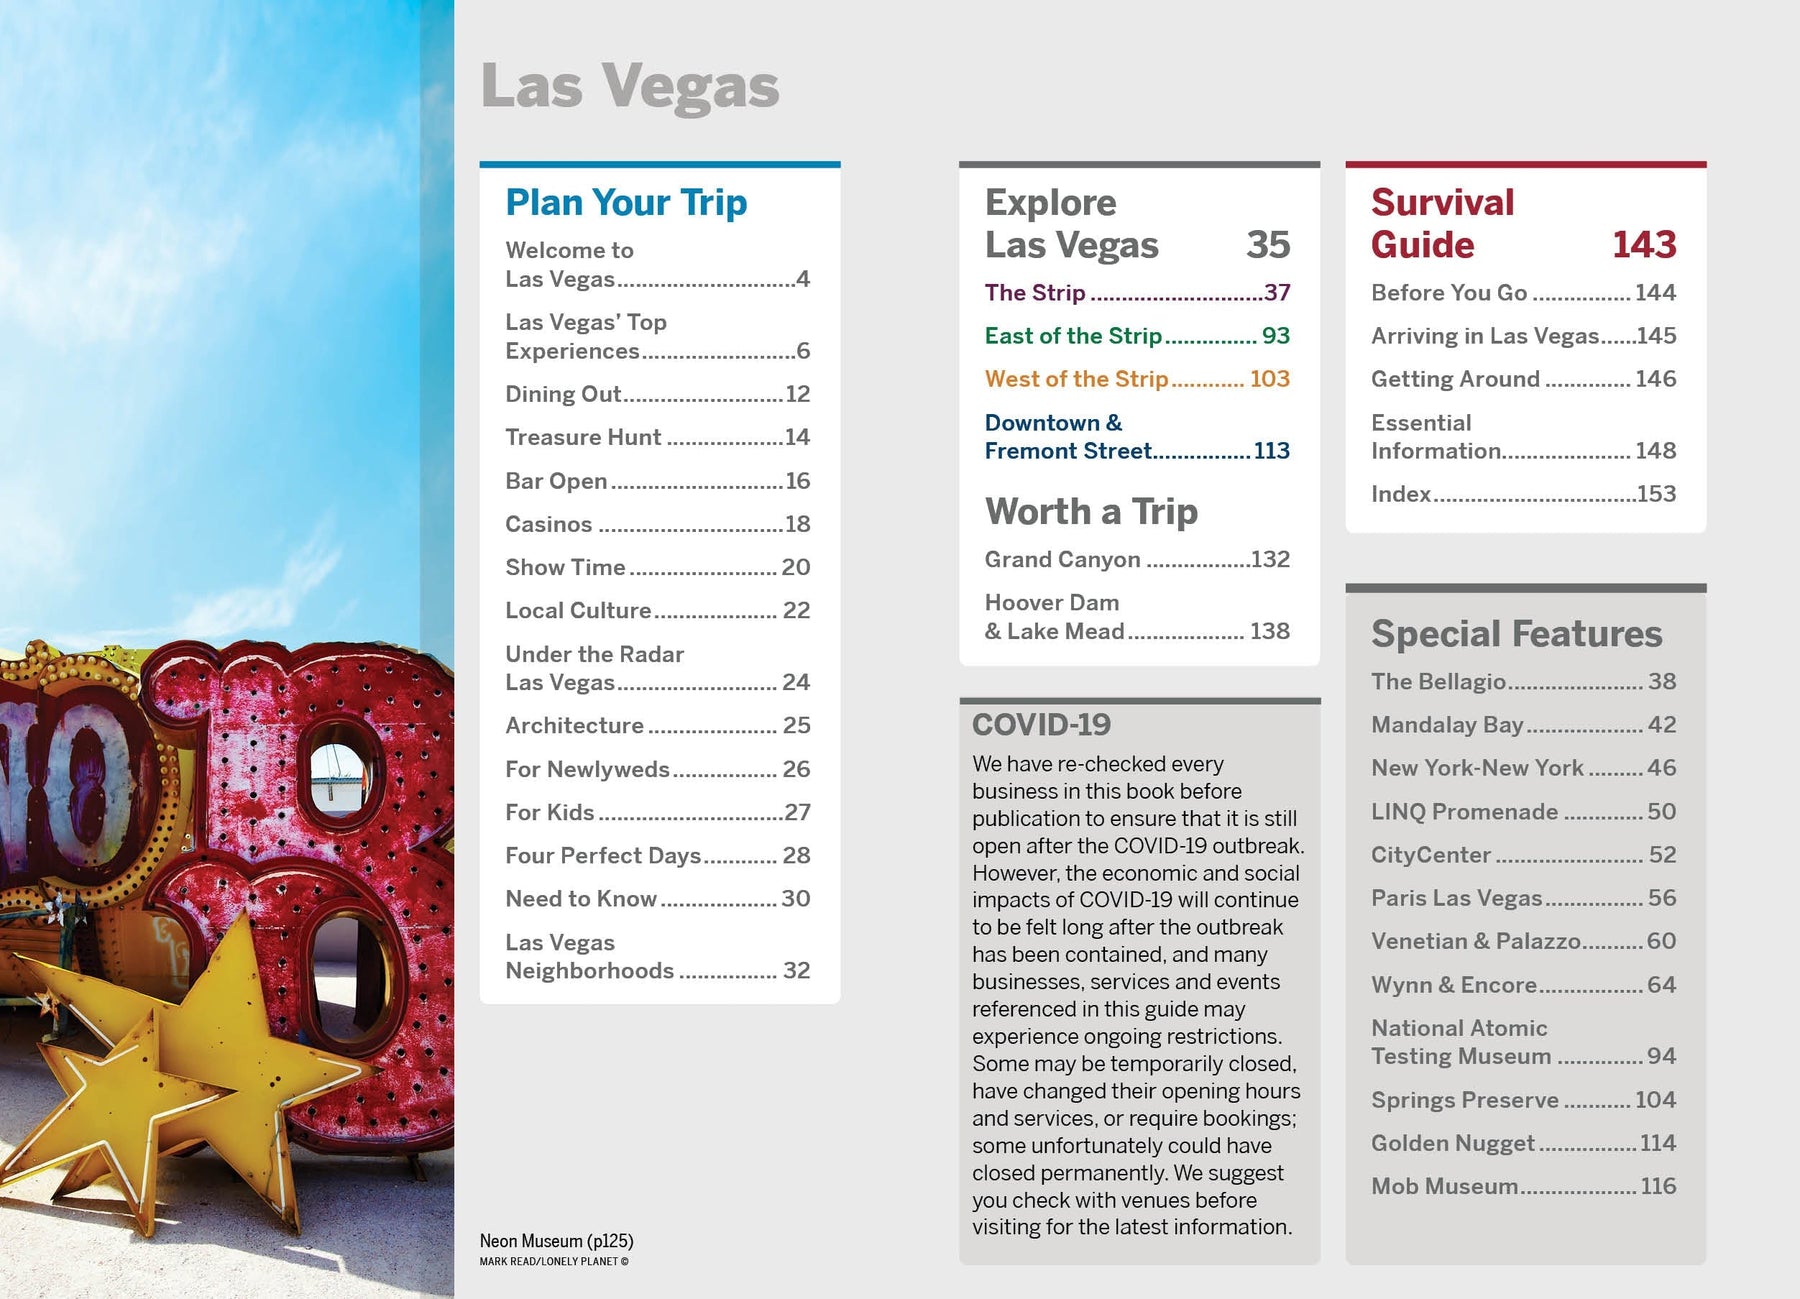 Pocket Las Vegas - Book